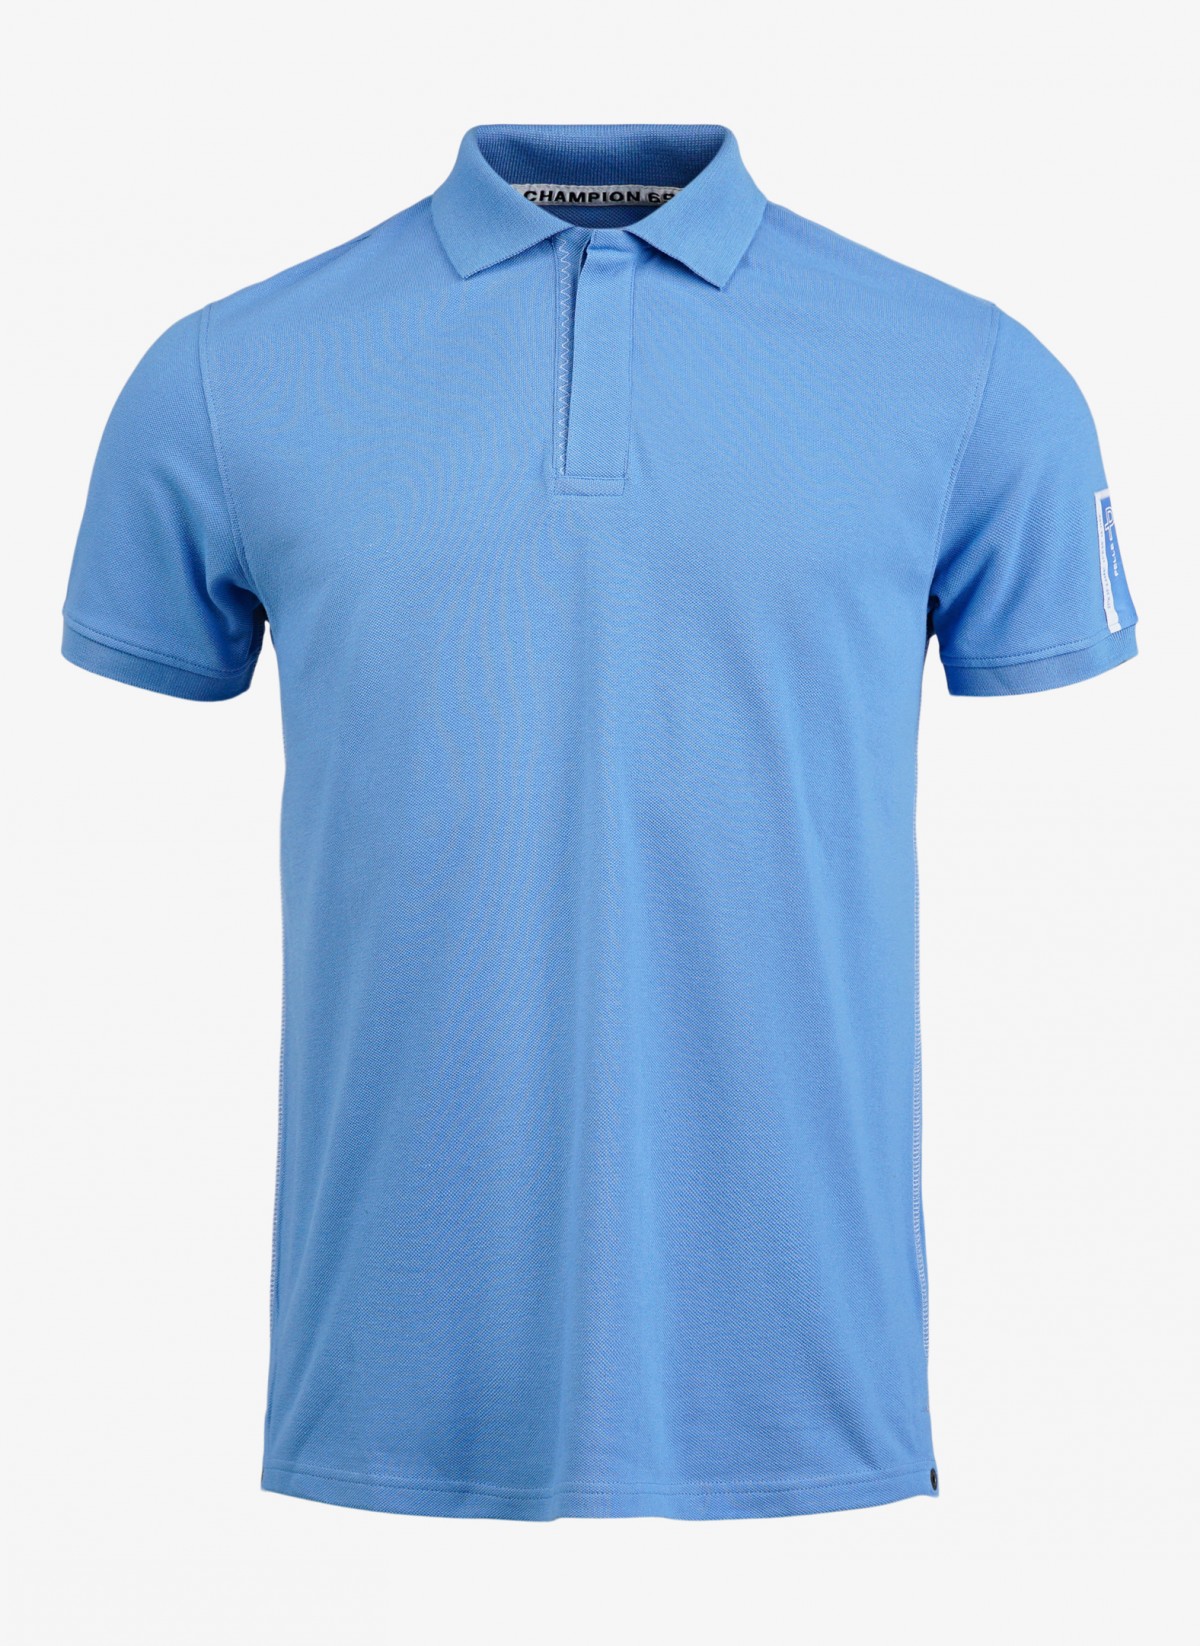 Team Polo Shirt - Sailor Blue - Ruffords Country Store